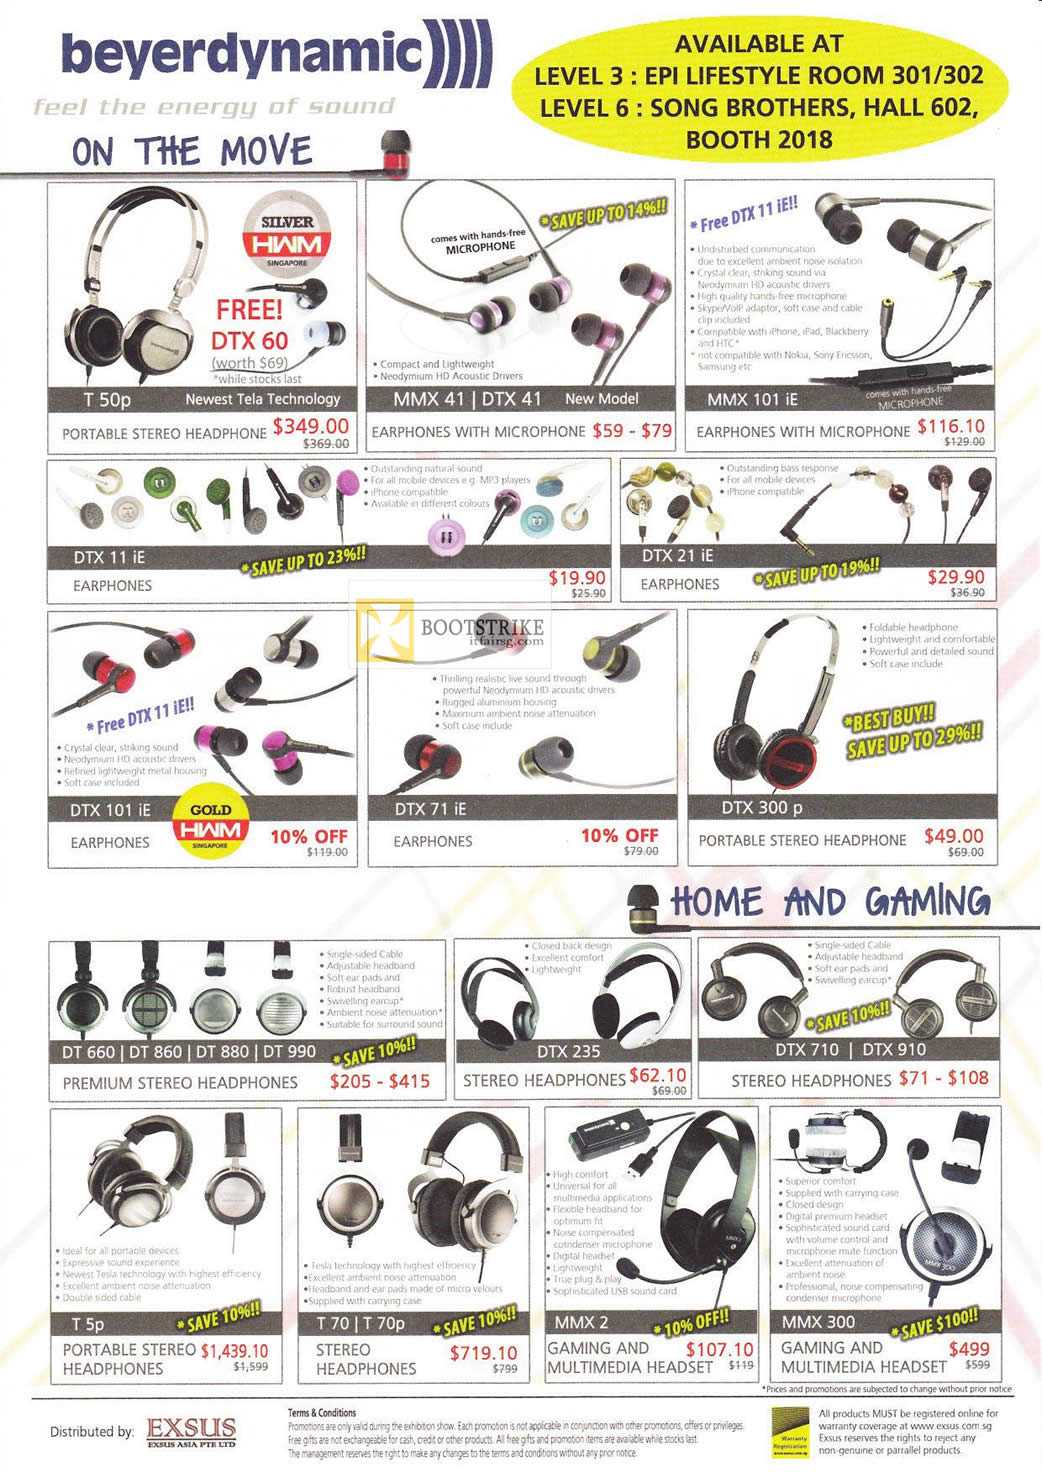 PC SHOW 2012 price list image brochure of Beyerdynamic Headphones T50p, MMX41, DTX41, MMX101iE, DTX110iE, DTX300p, DTX235, DTX710, MMX2, MMX300, T5p, T70, T70p